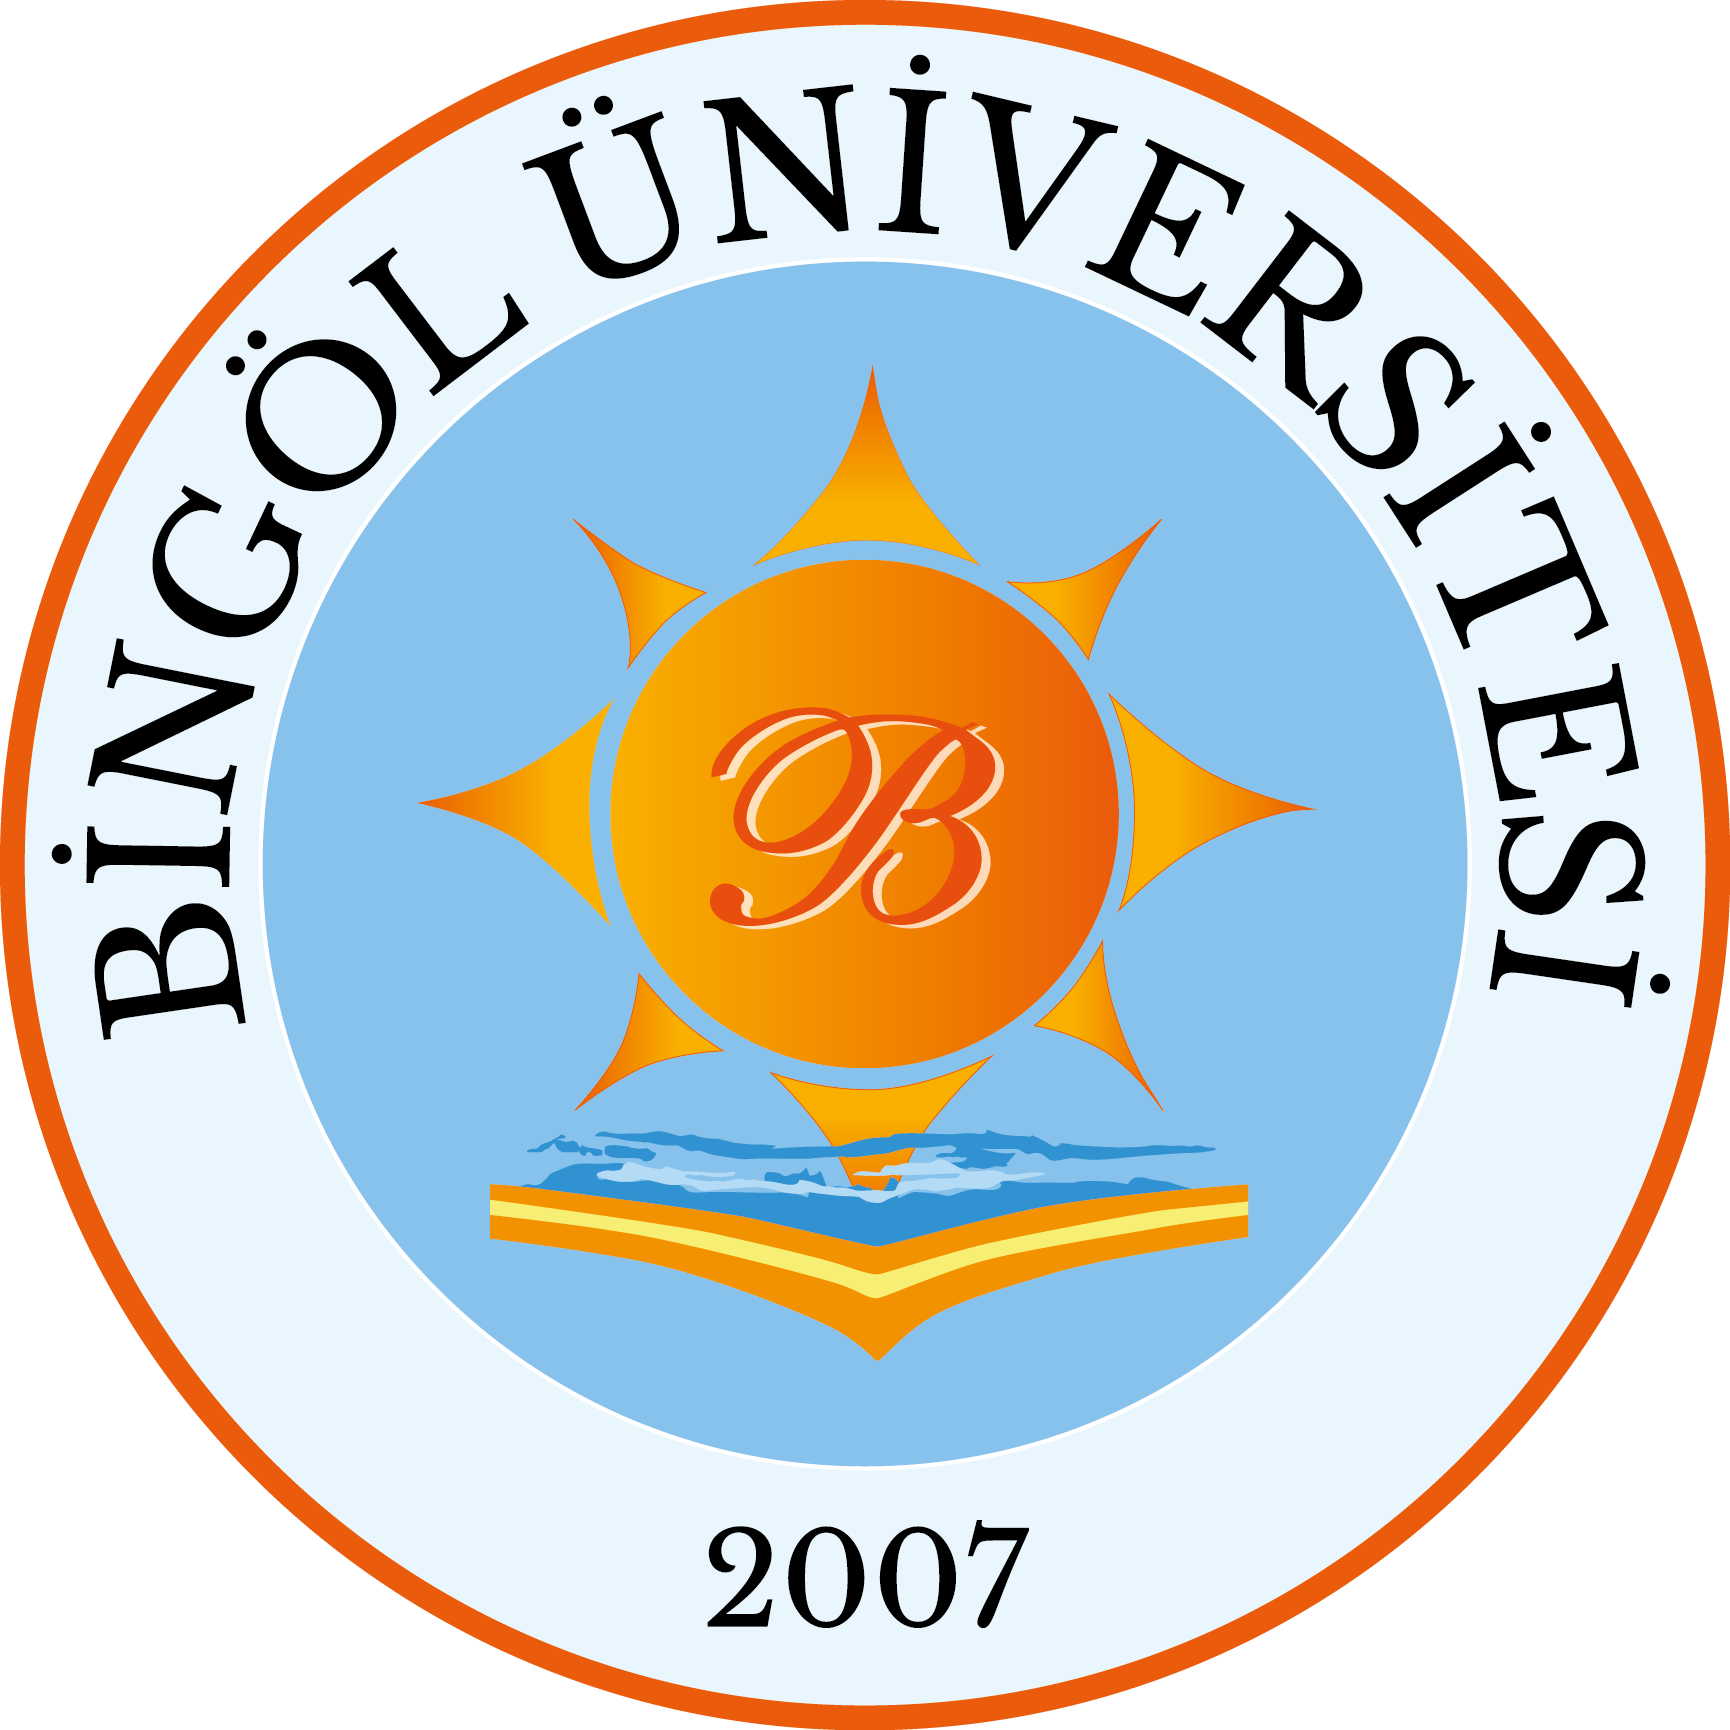 bingol universitesi logo